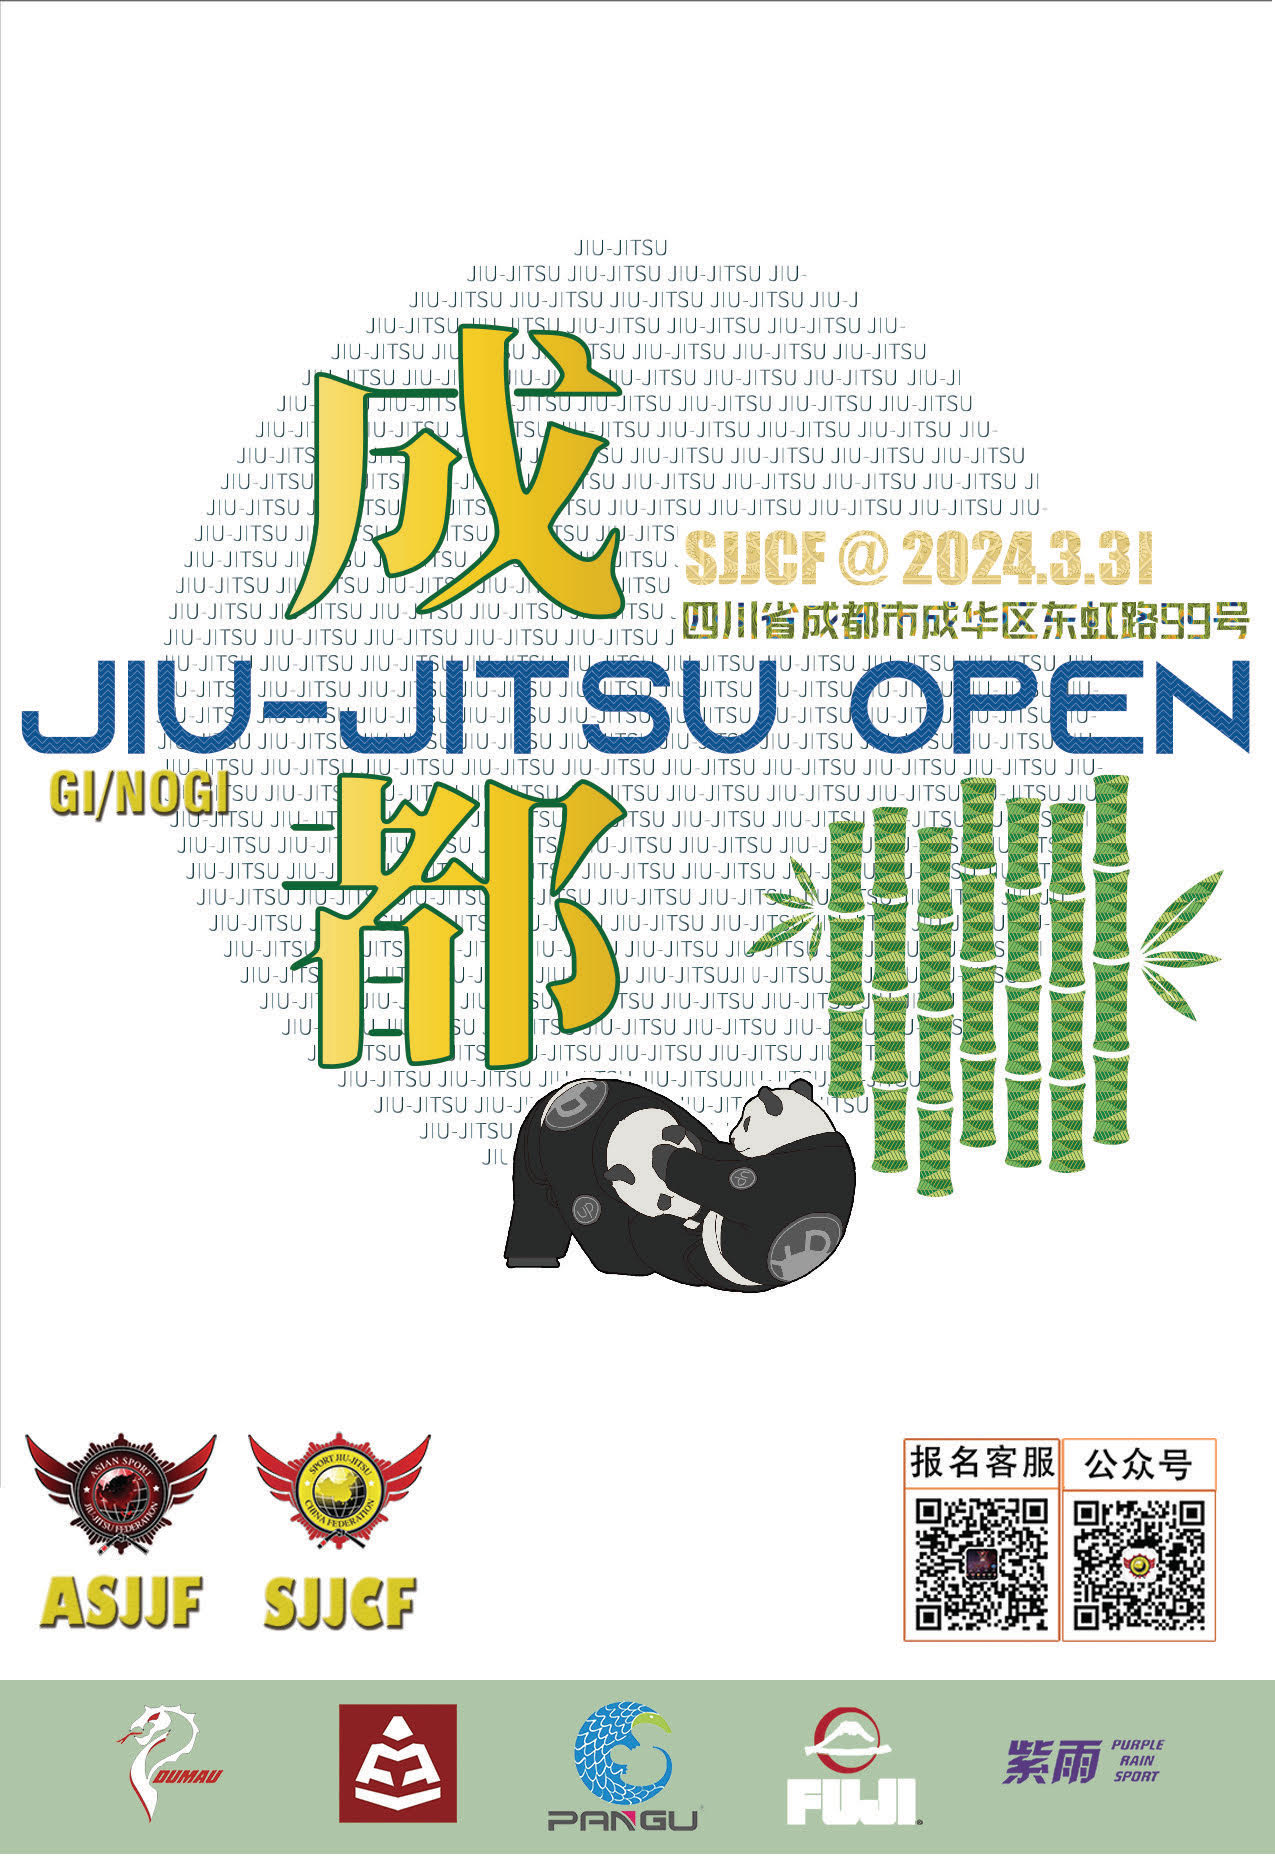 sjjcf chengdu jiu jitsu championship 2024